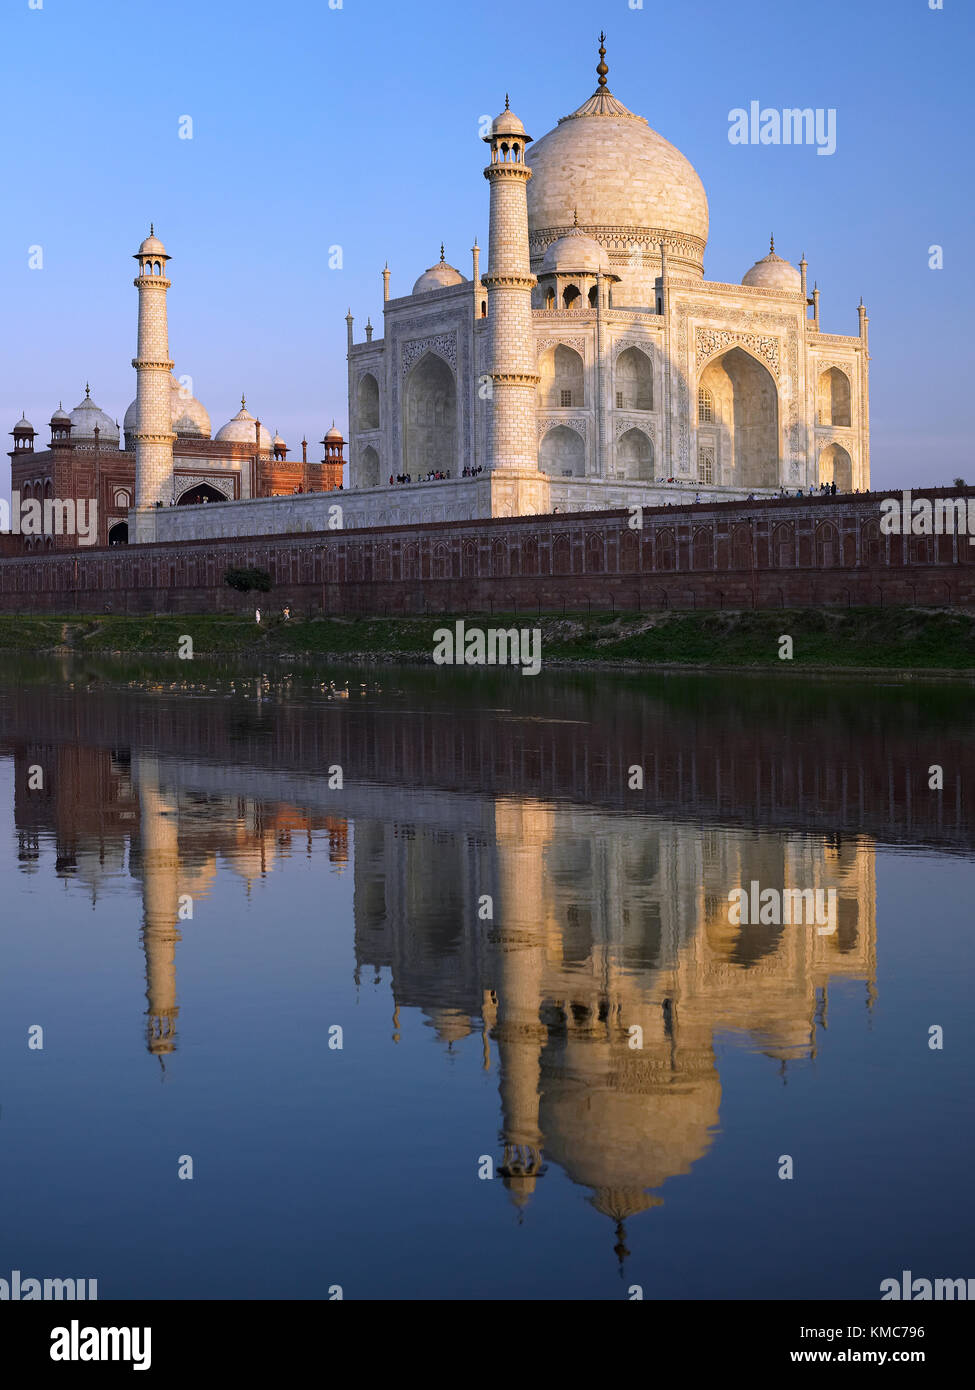 The Taj Mahal - Agra - India. The Taj Mahal is a mausoleum built by the